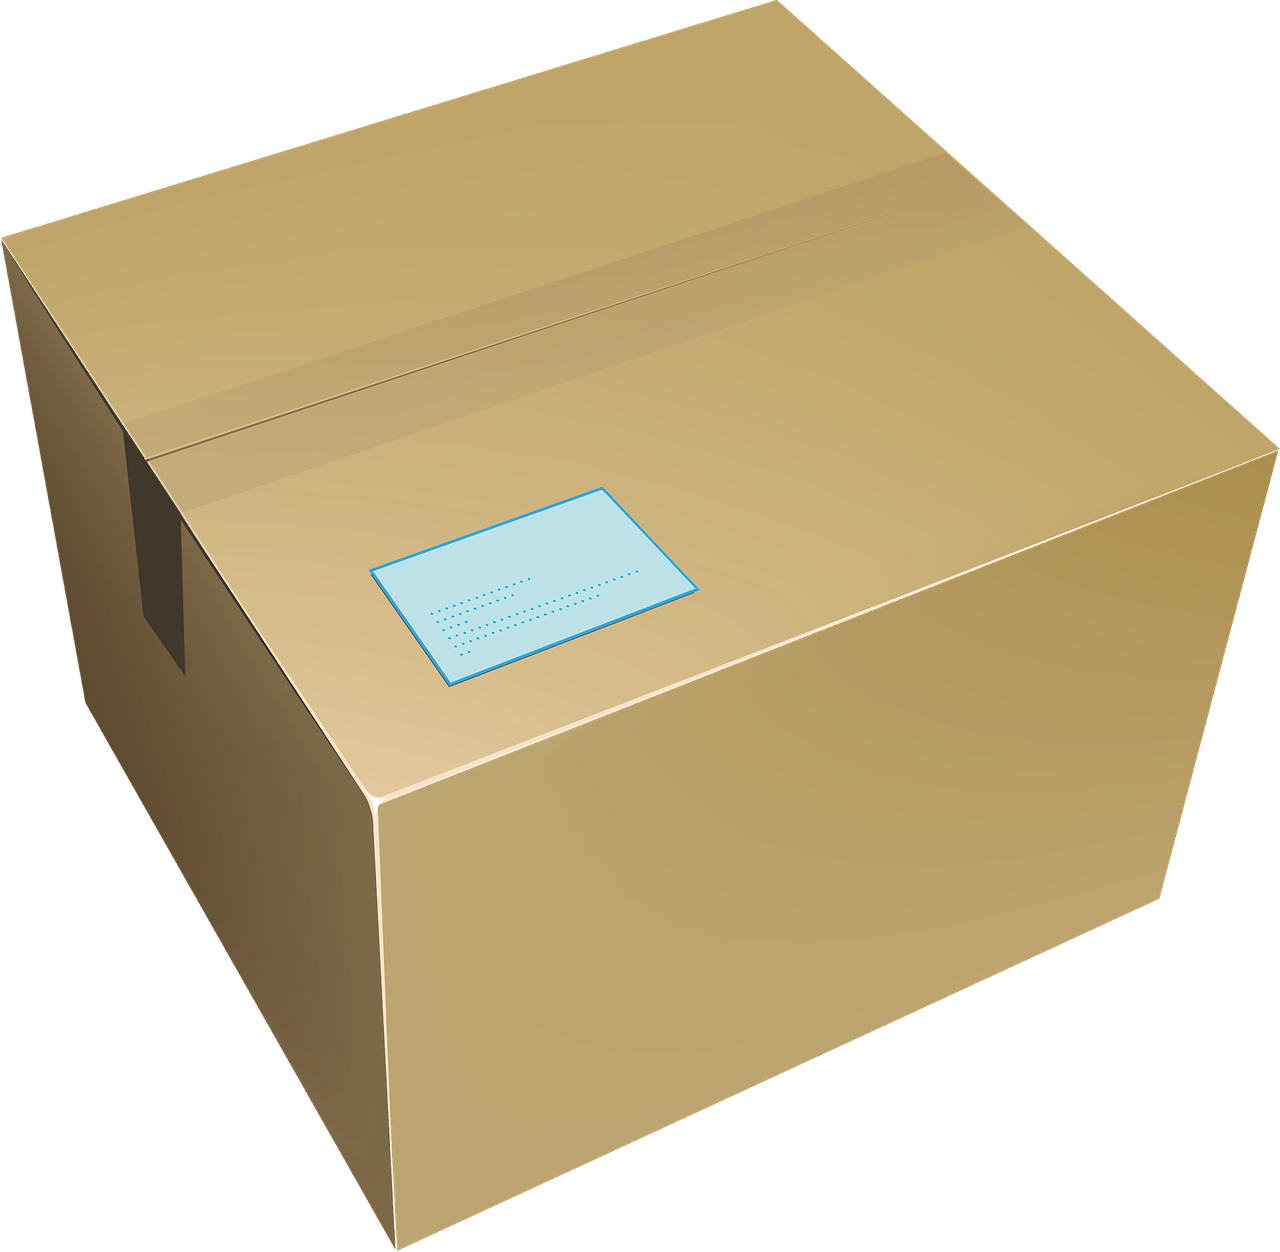 box paper delivery box free photo